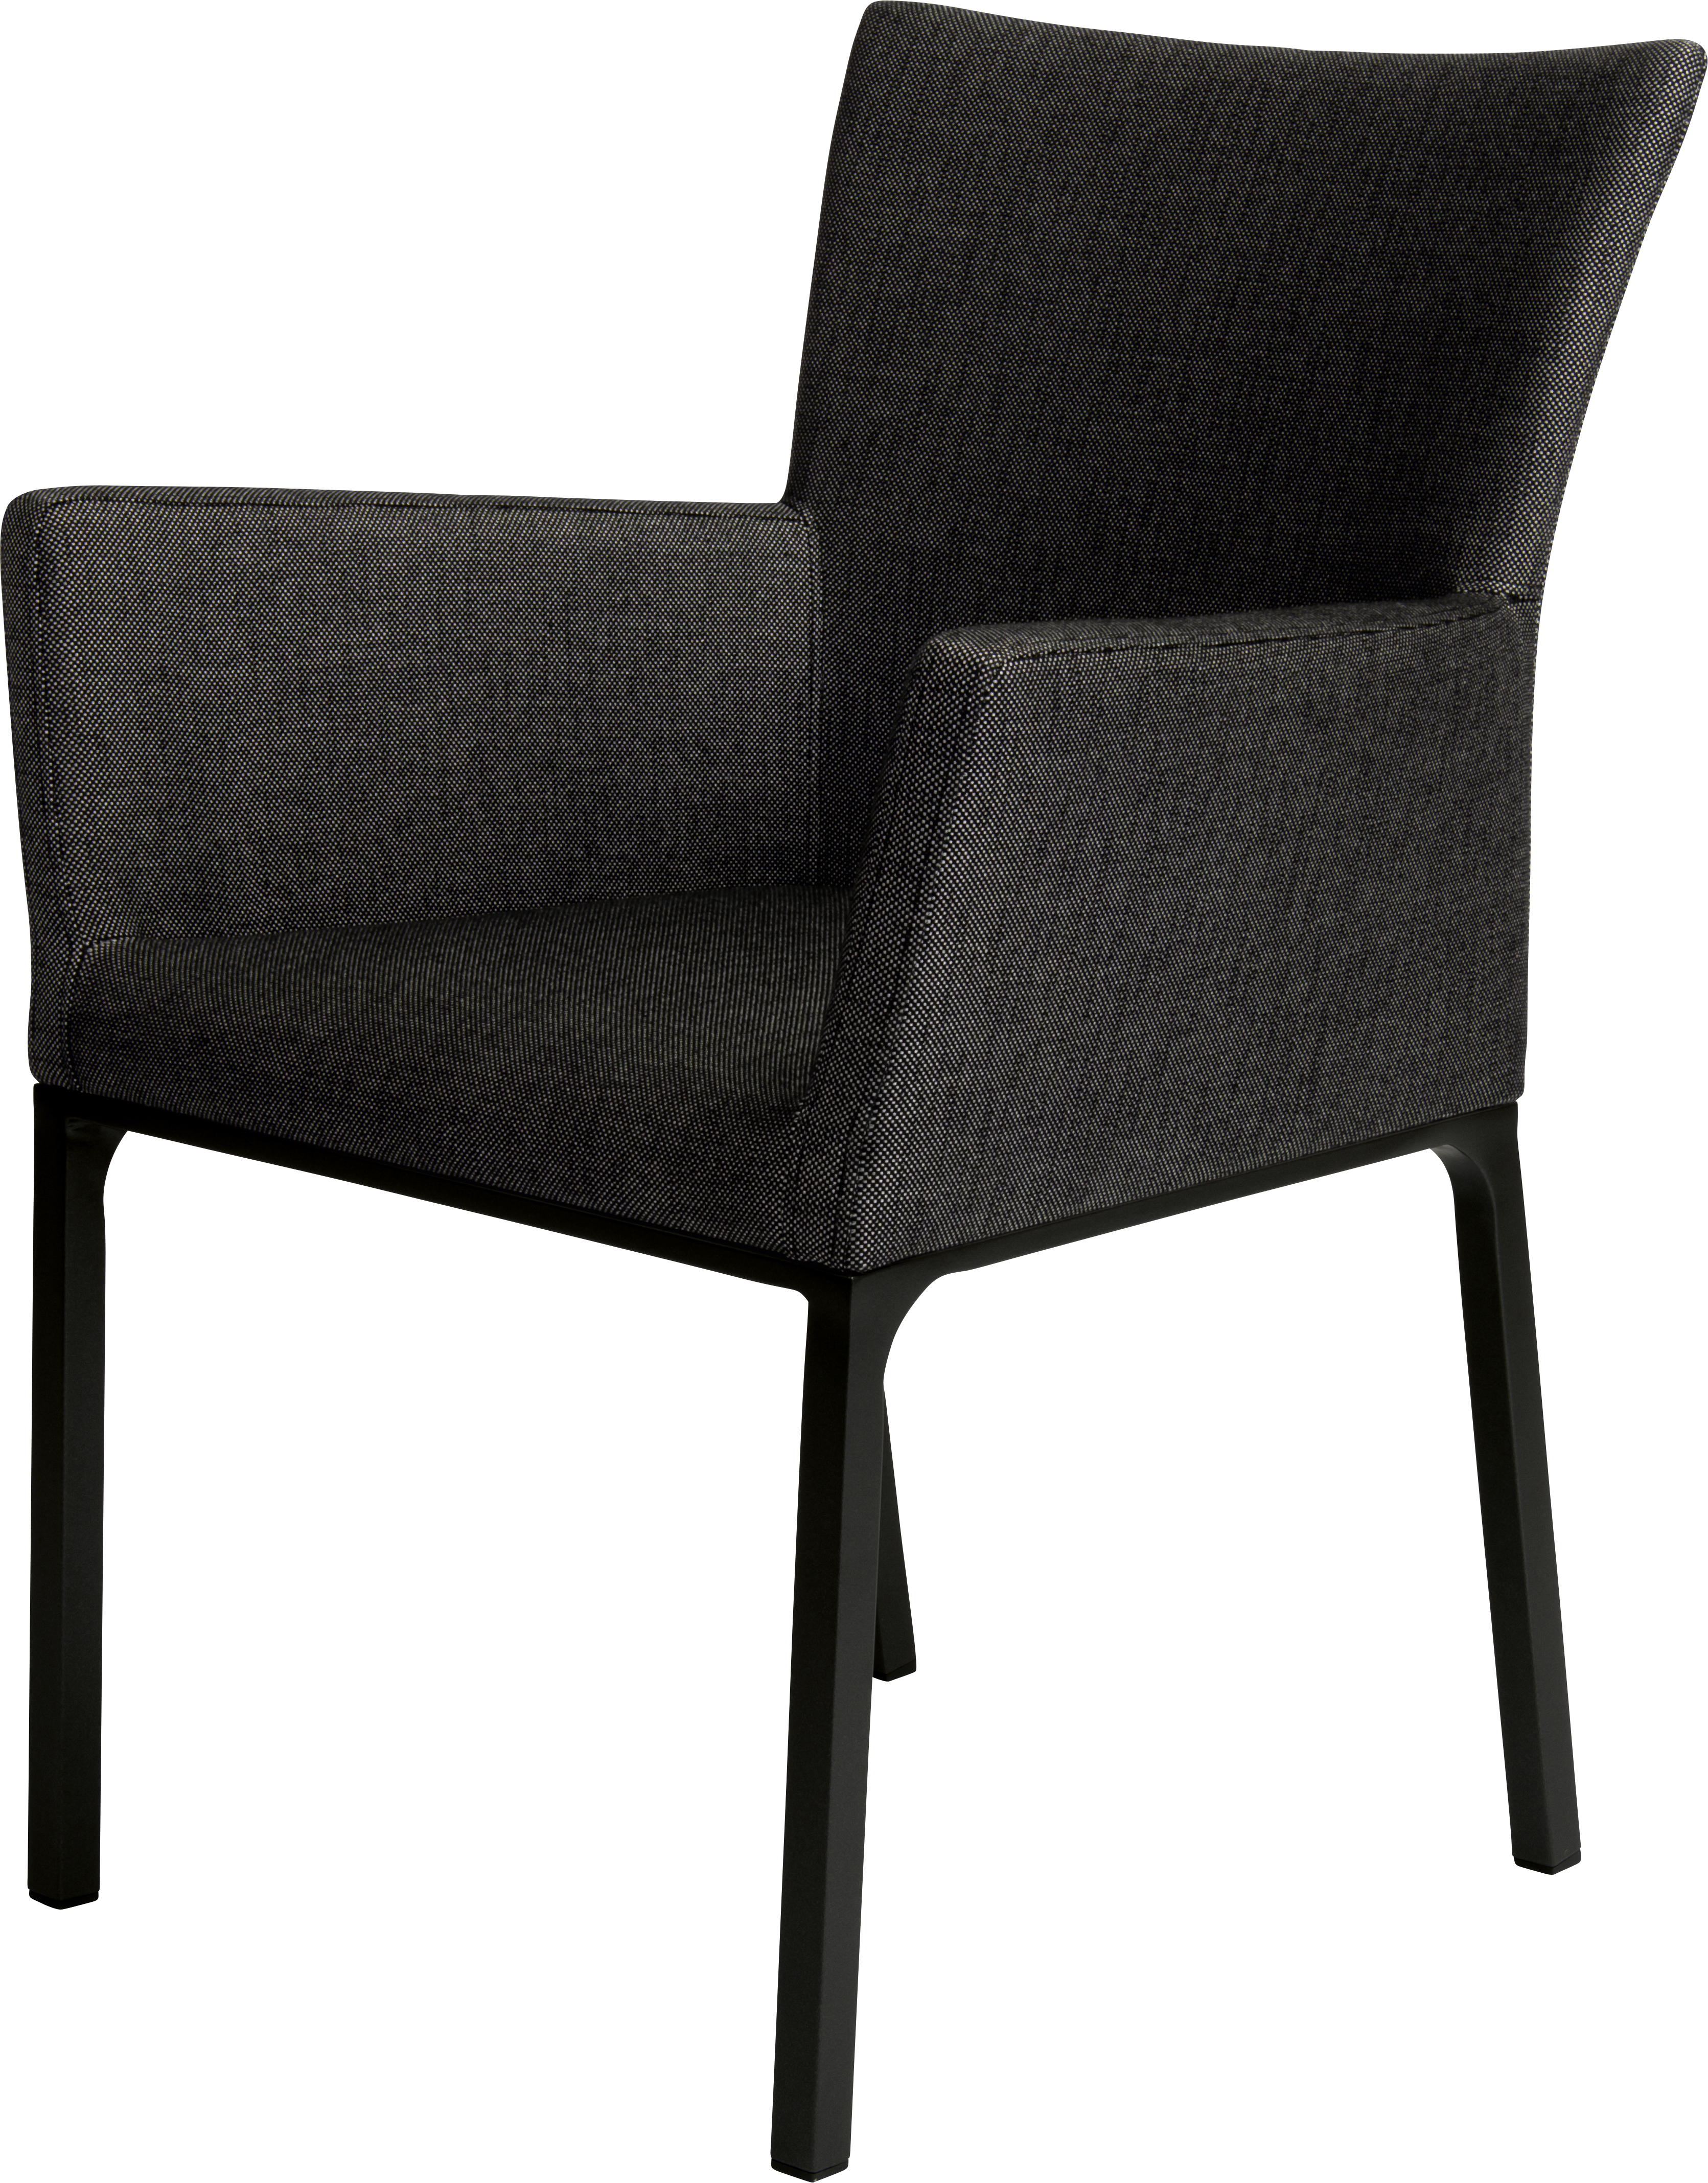 STERN Sessel ARTUS Aluminium schwarz matt Bezug Outdoorstoff seidenschwarz